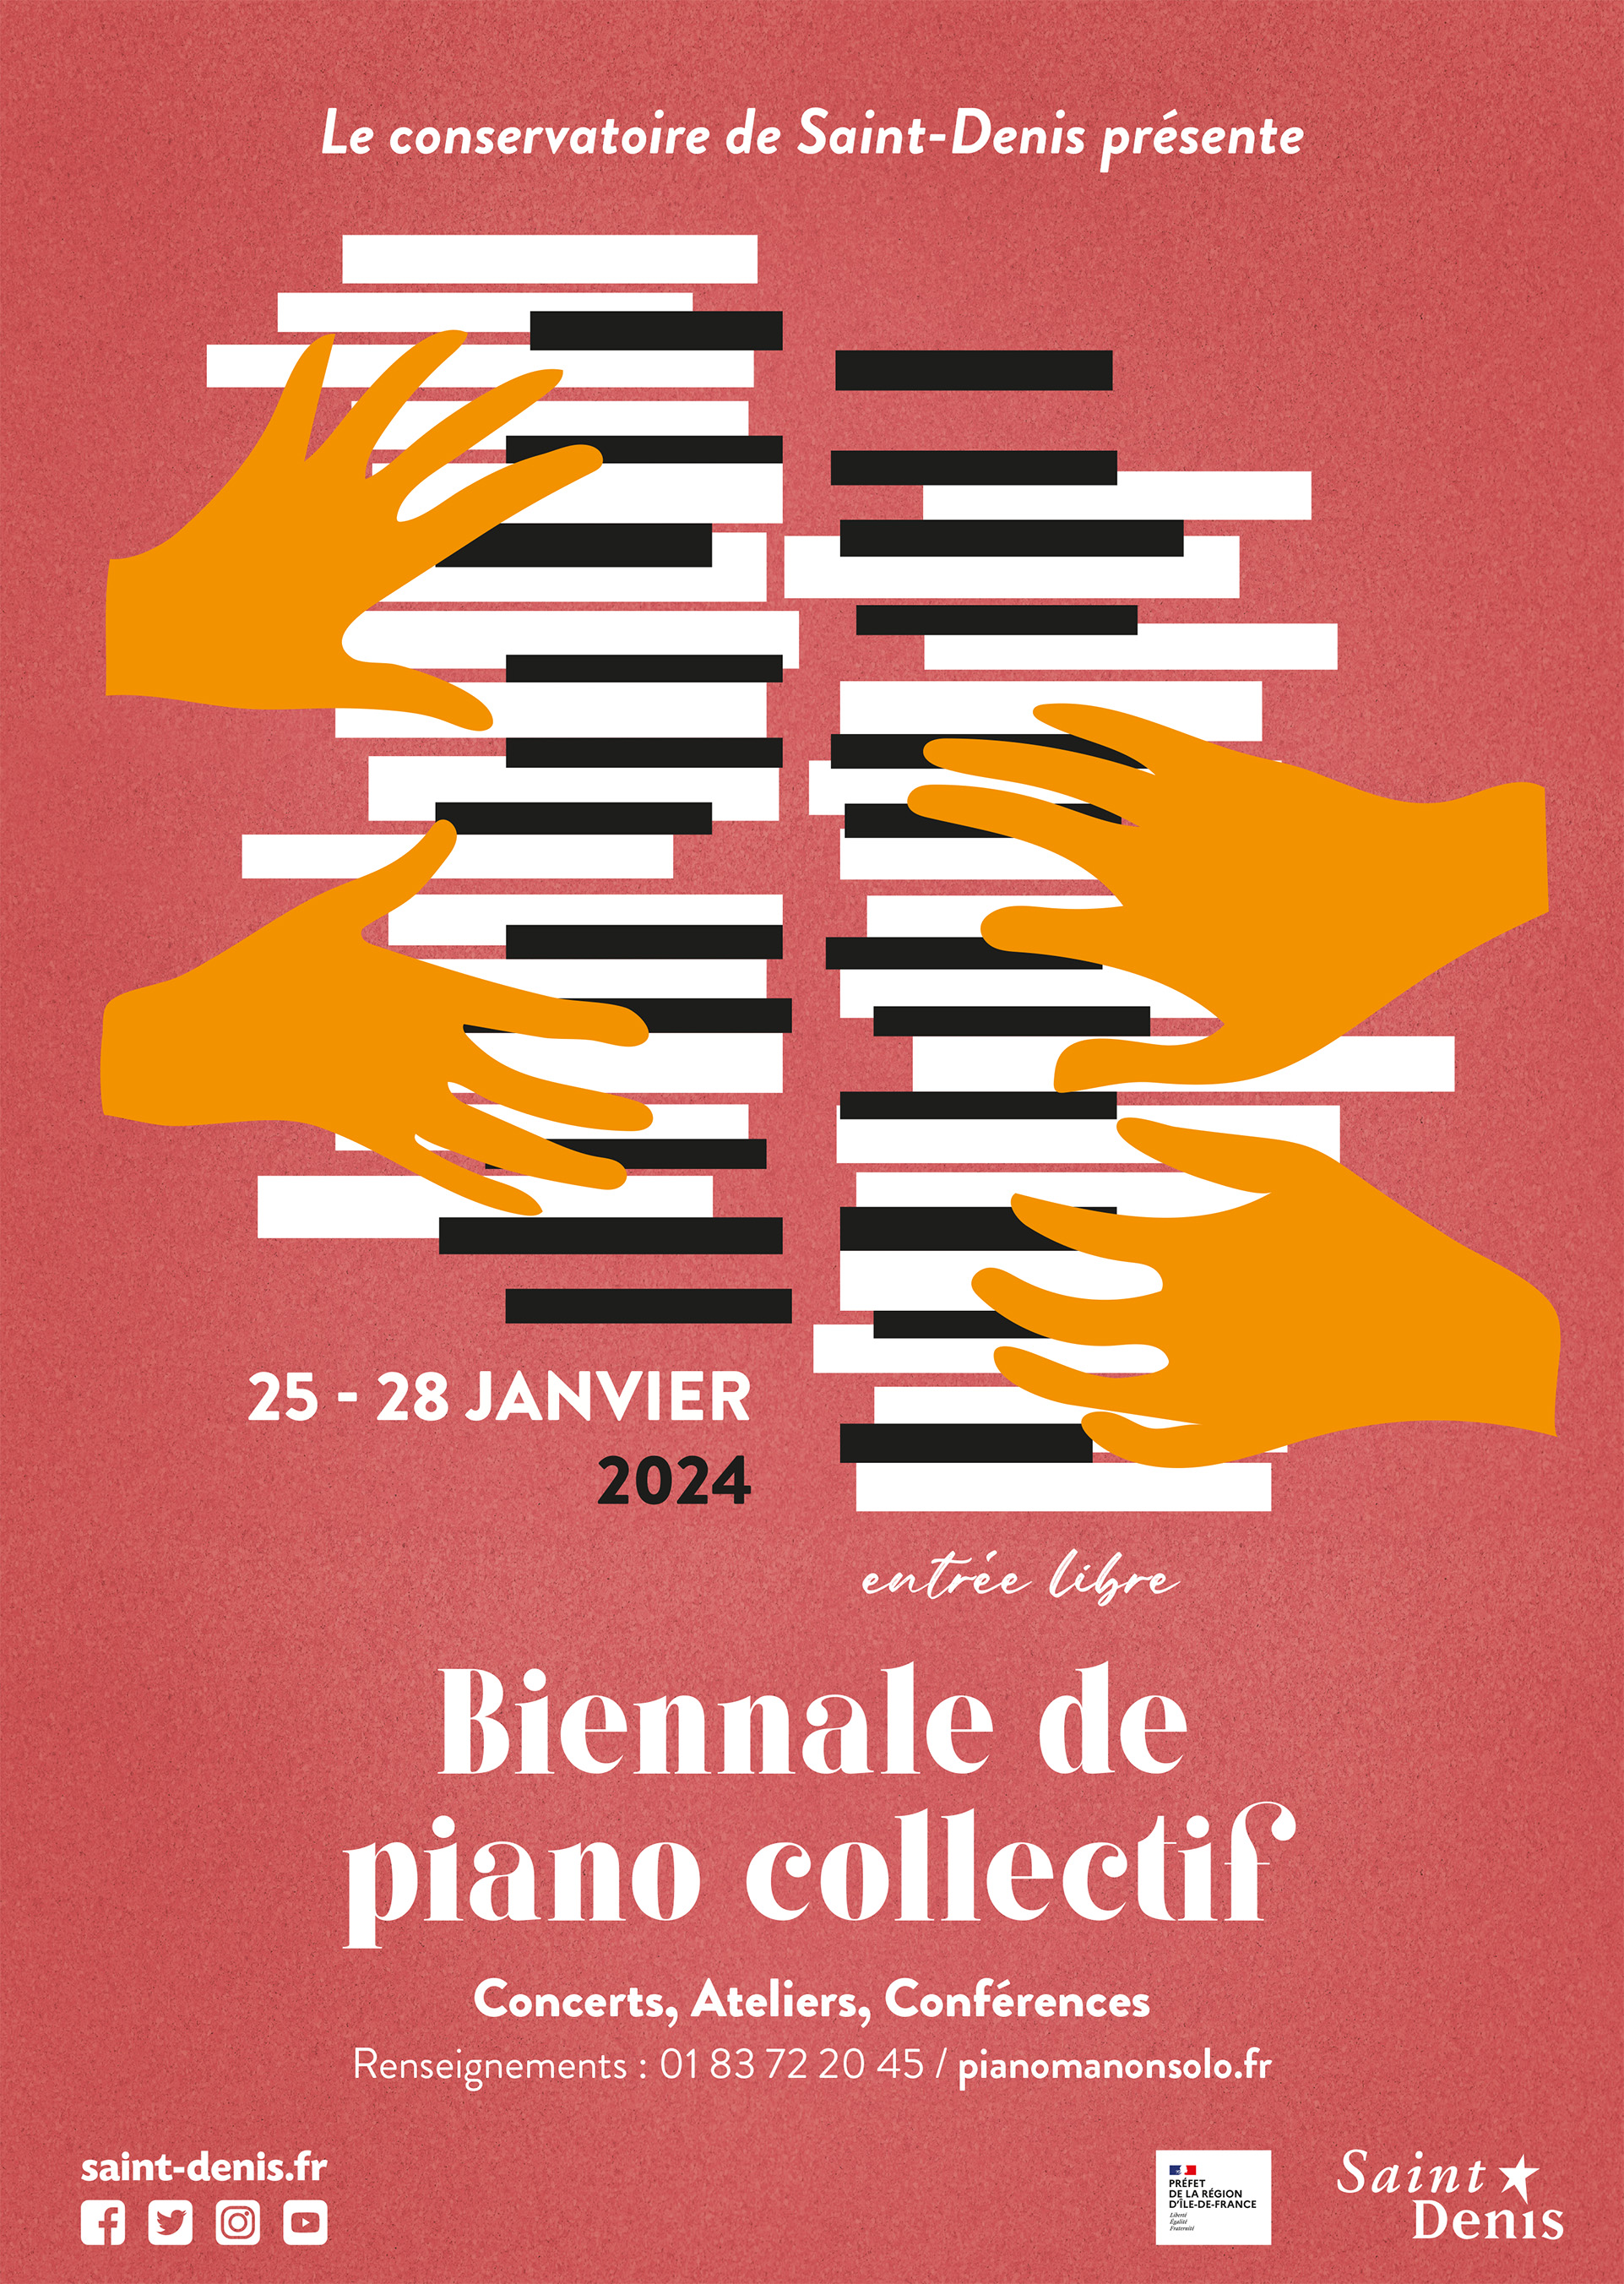 Biennale Piano collectif 2024 - Saint-Denis